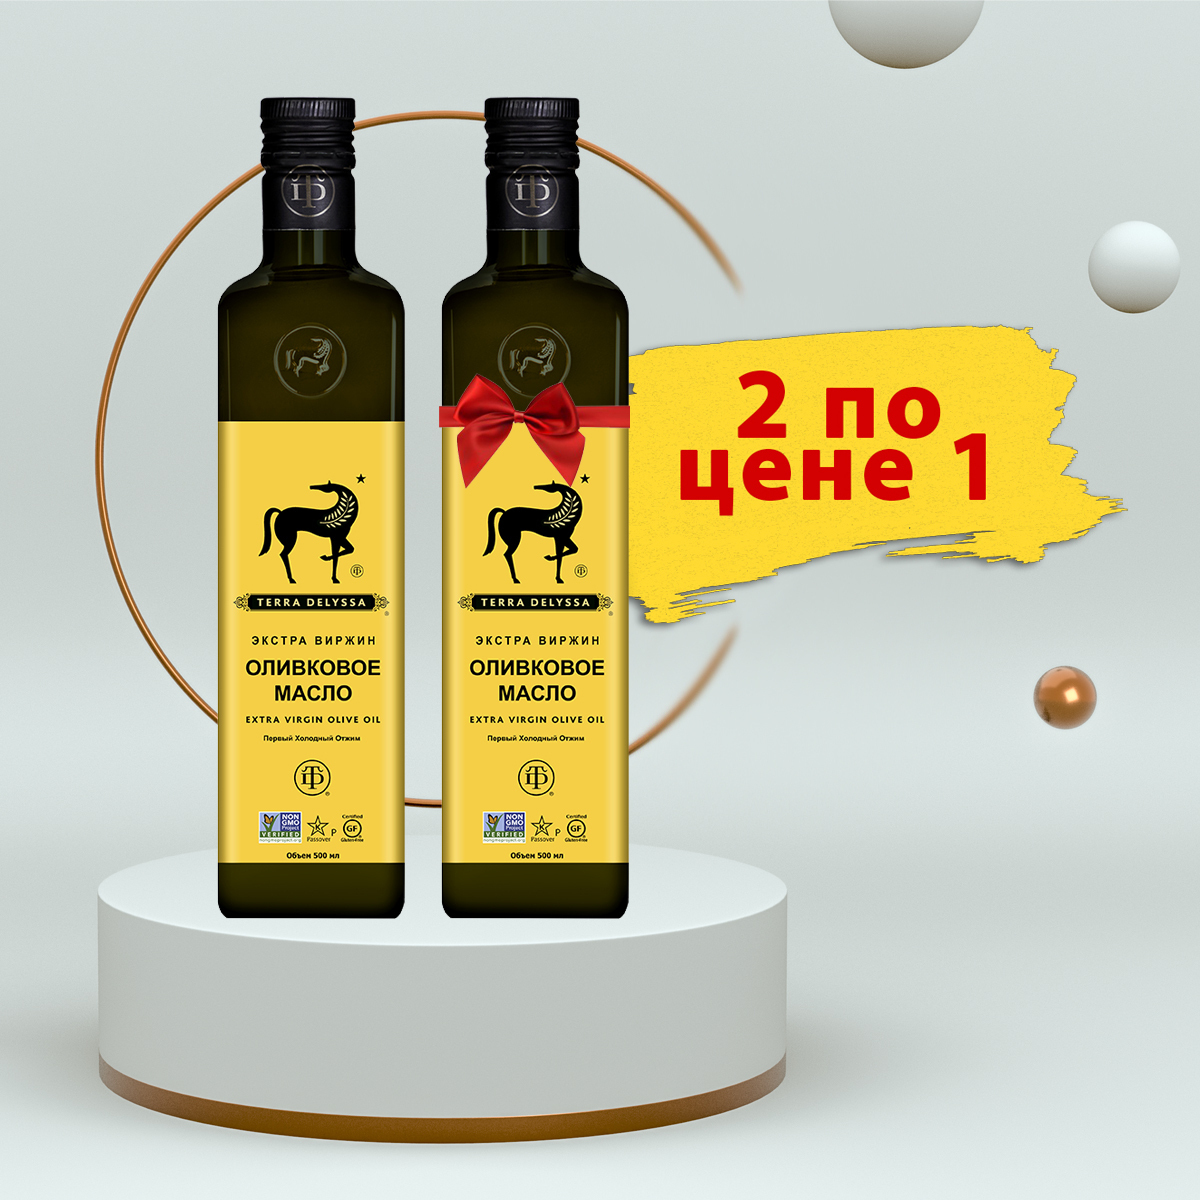 Оливковое масло terra